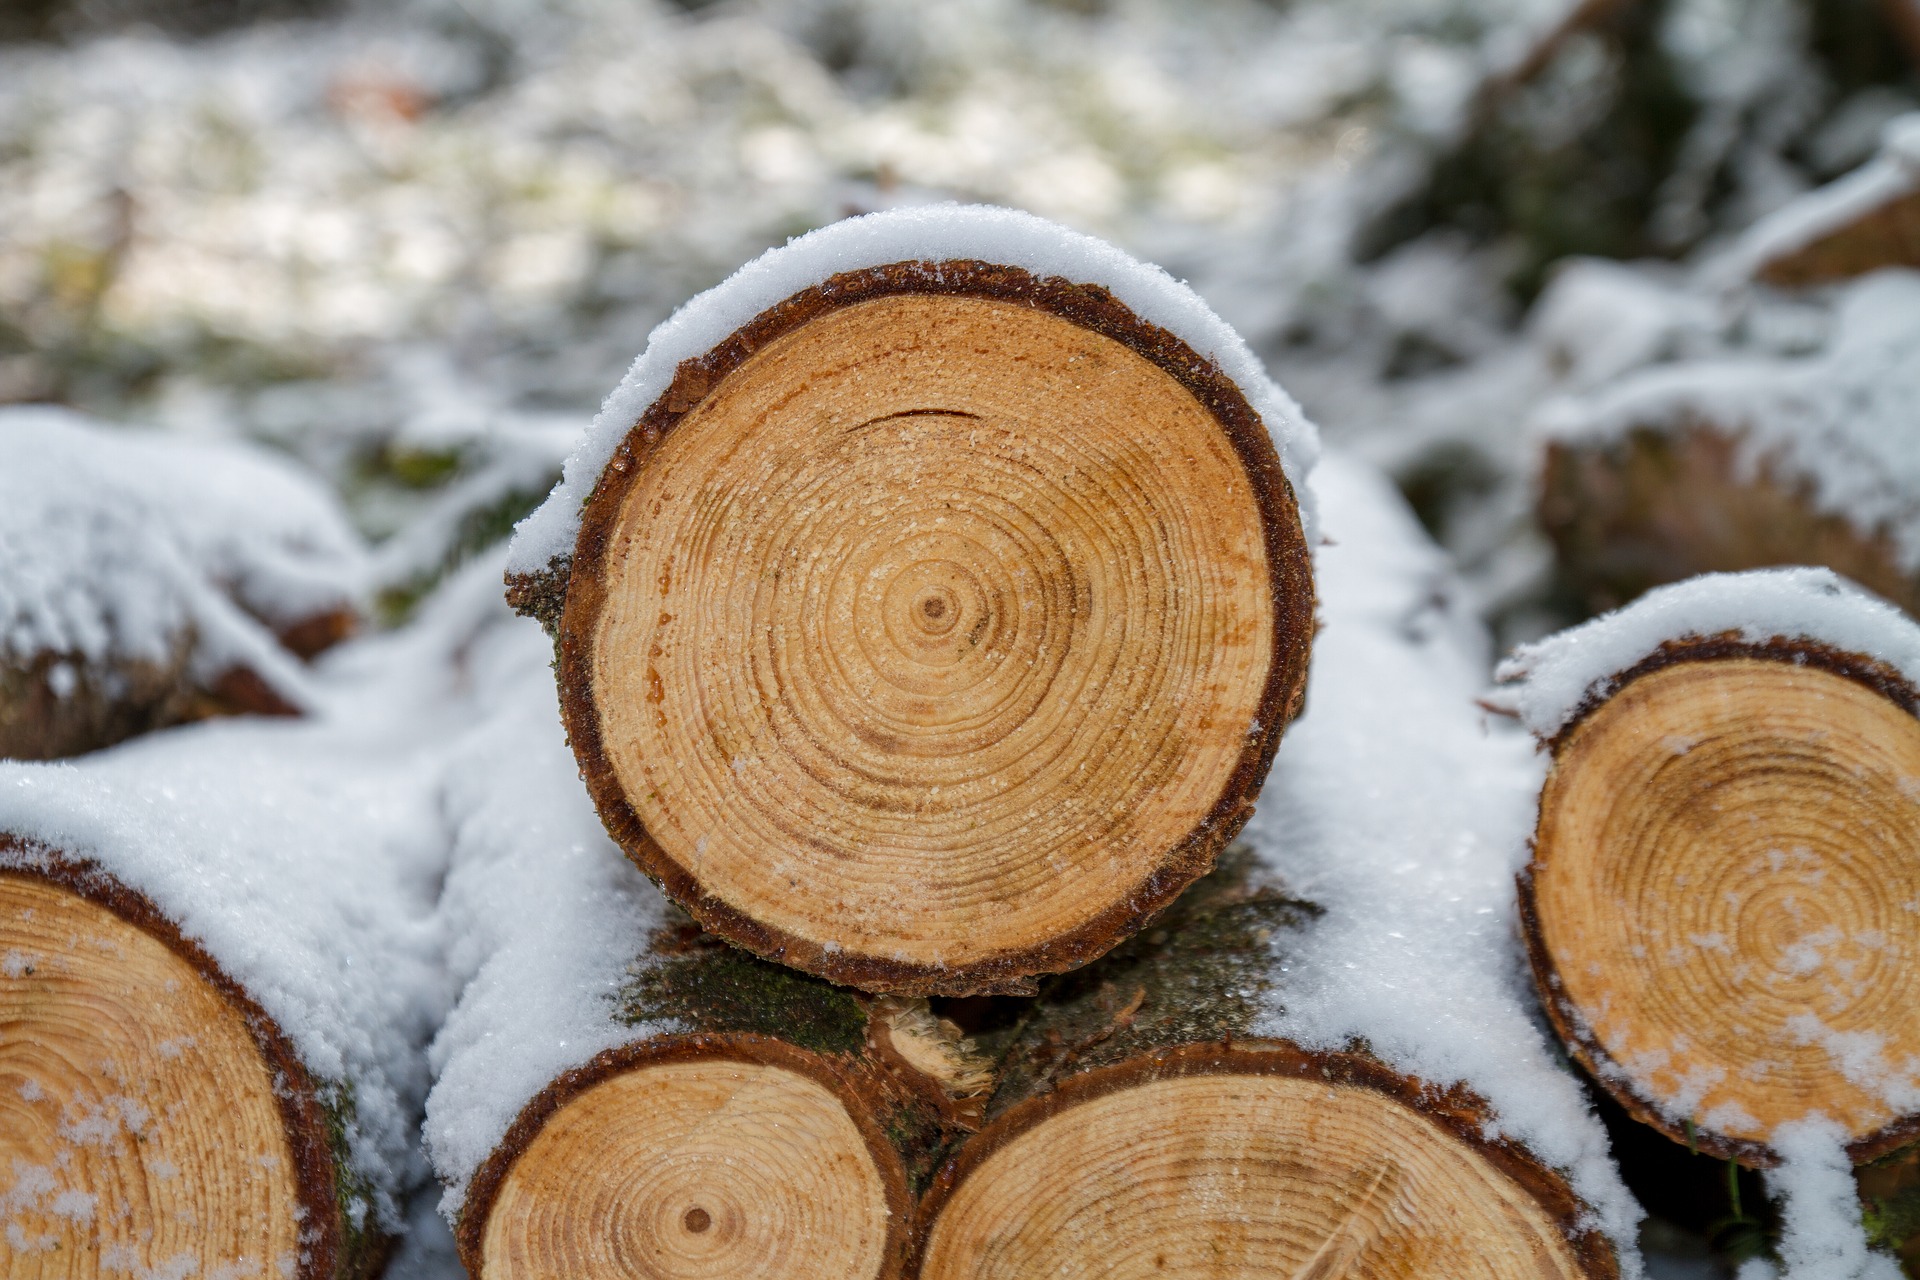 Timber focus restricts service development